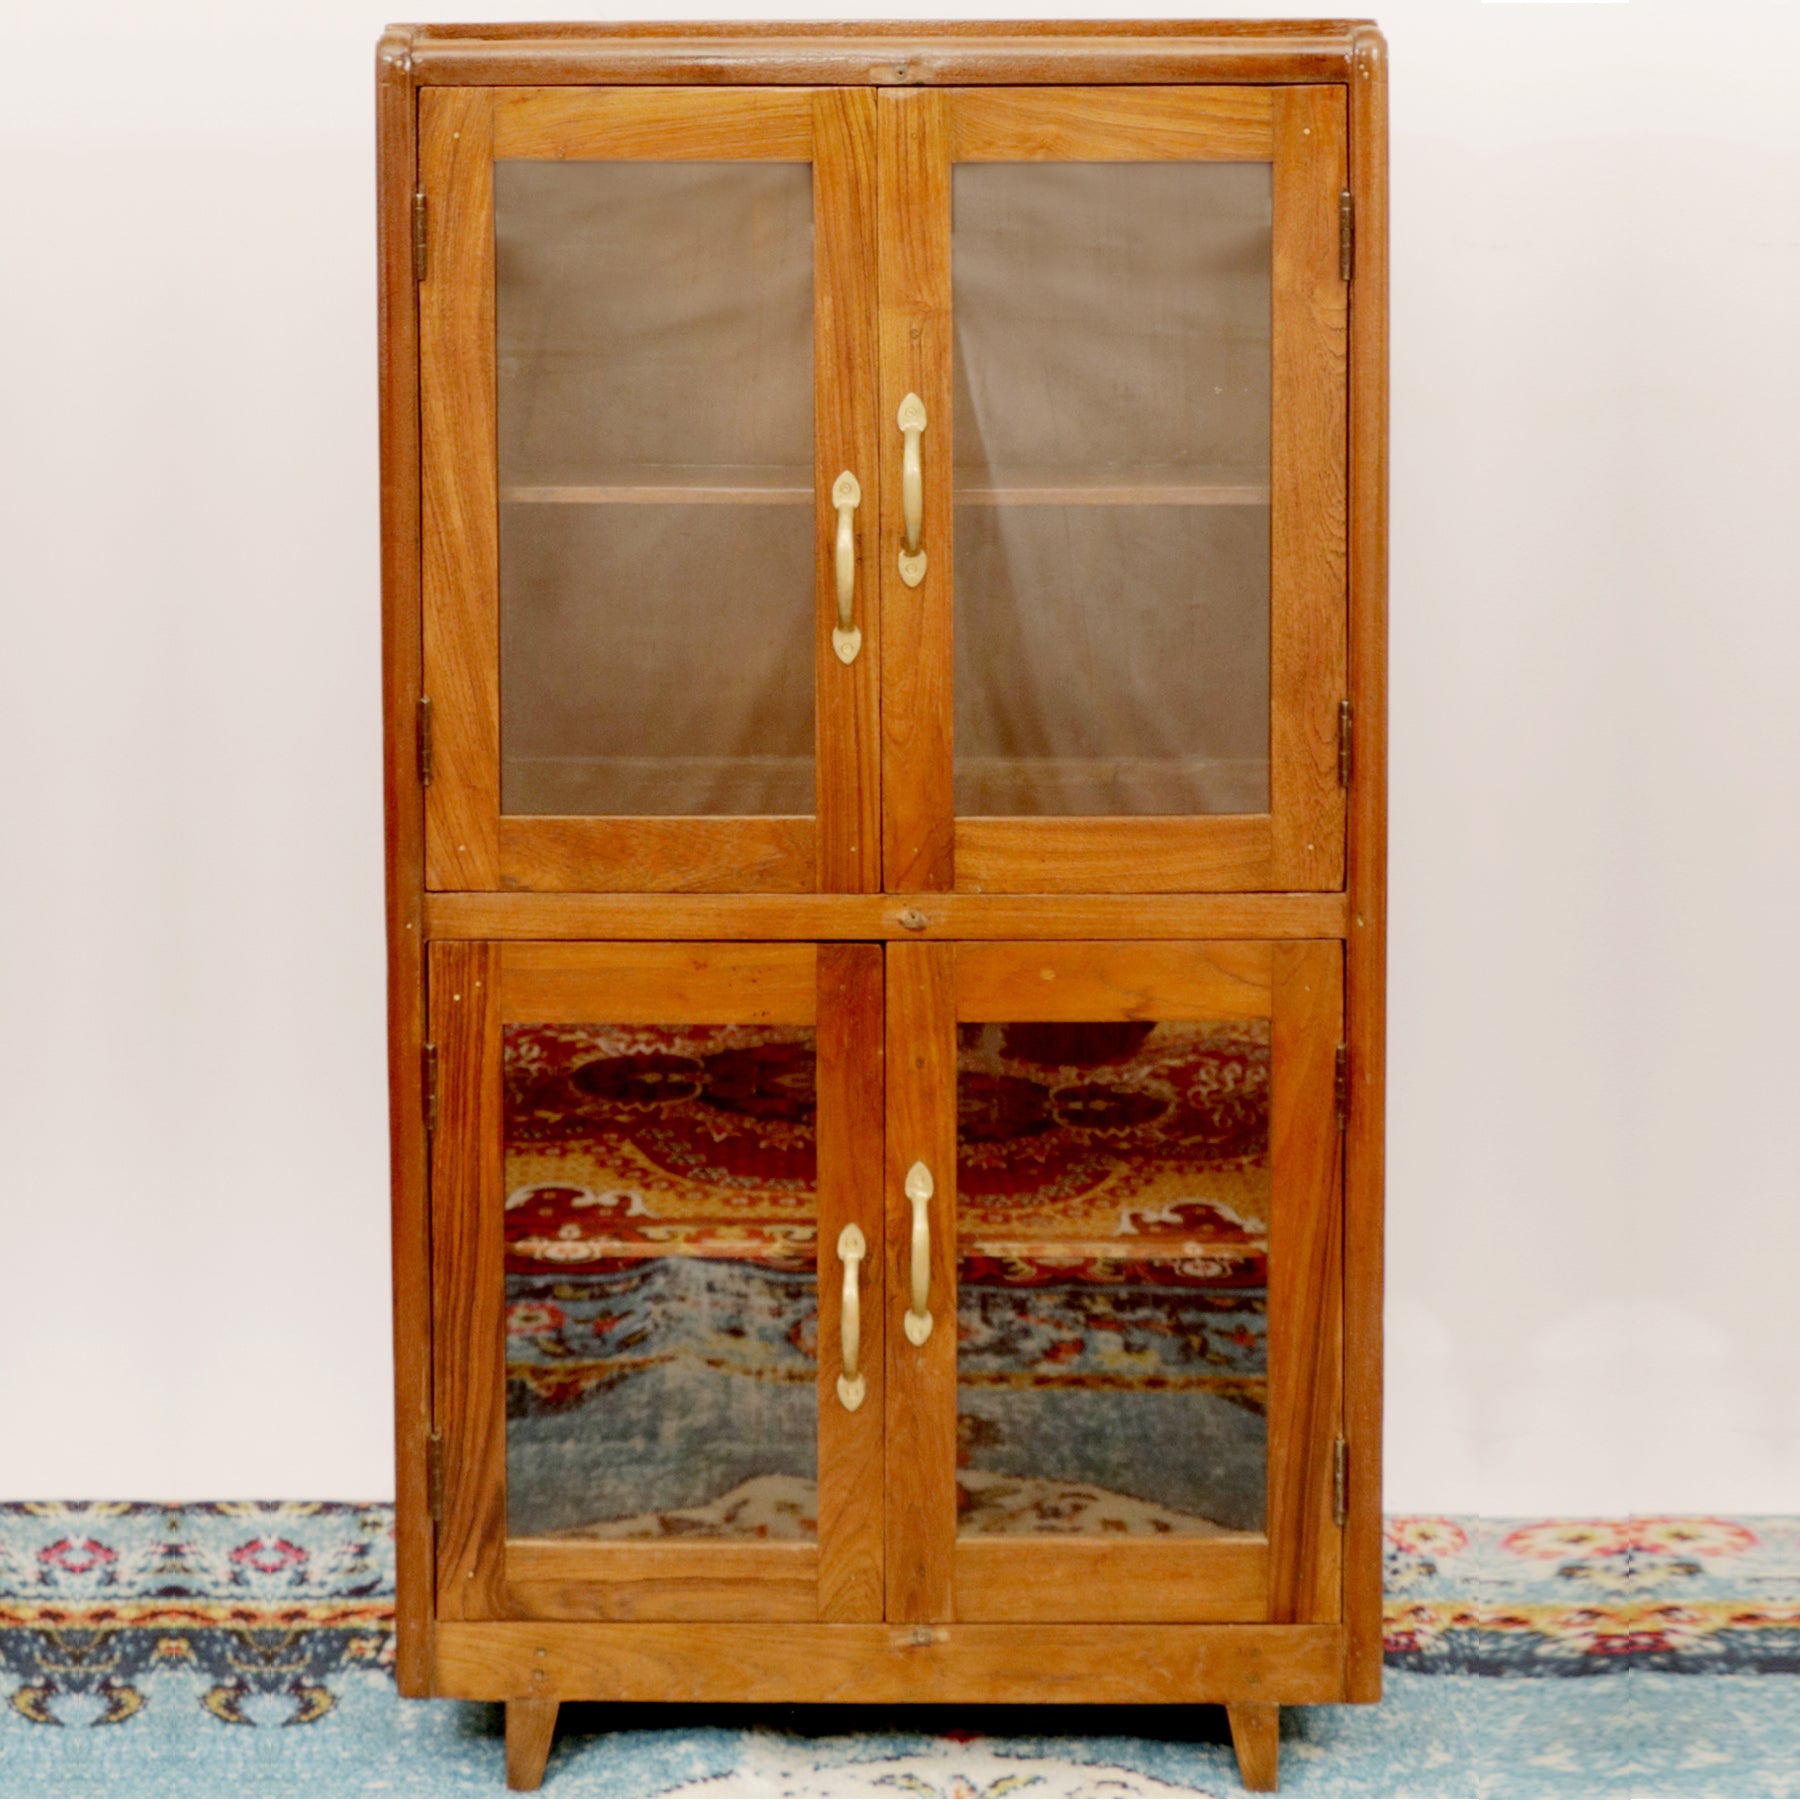 4-Tier Wooden Display Cabinet Showcase